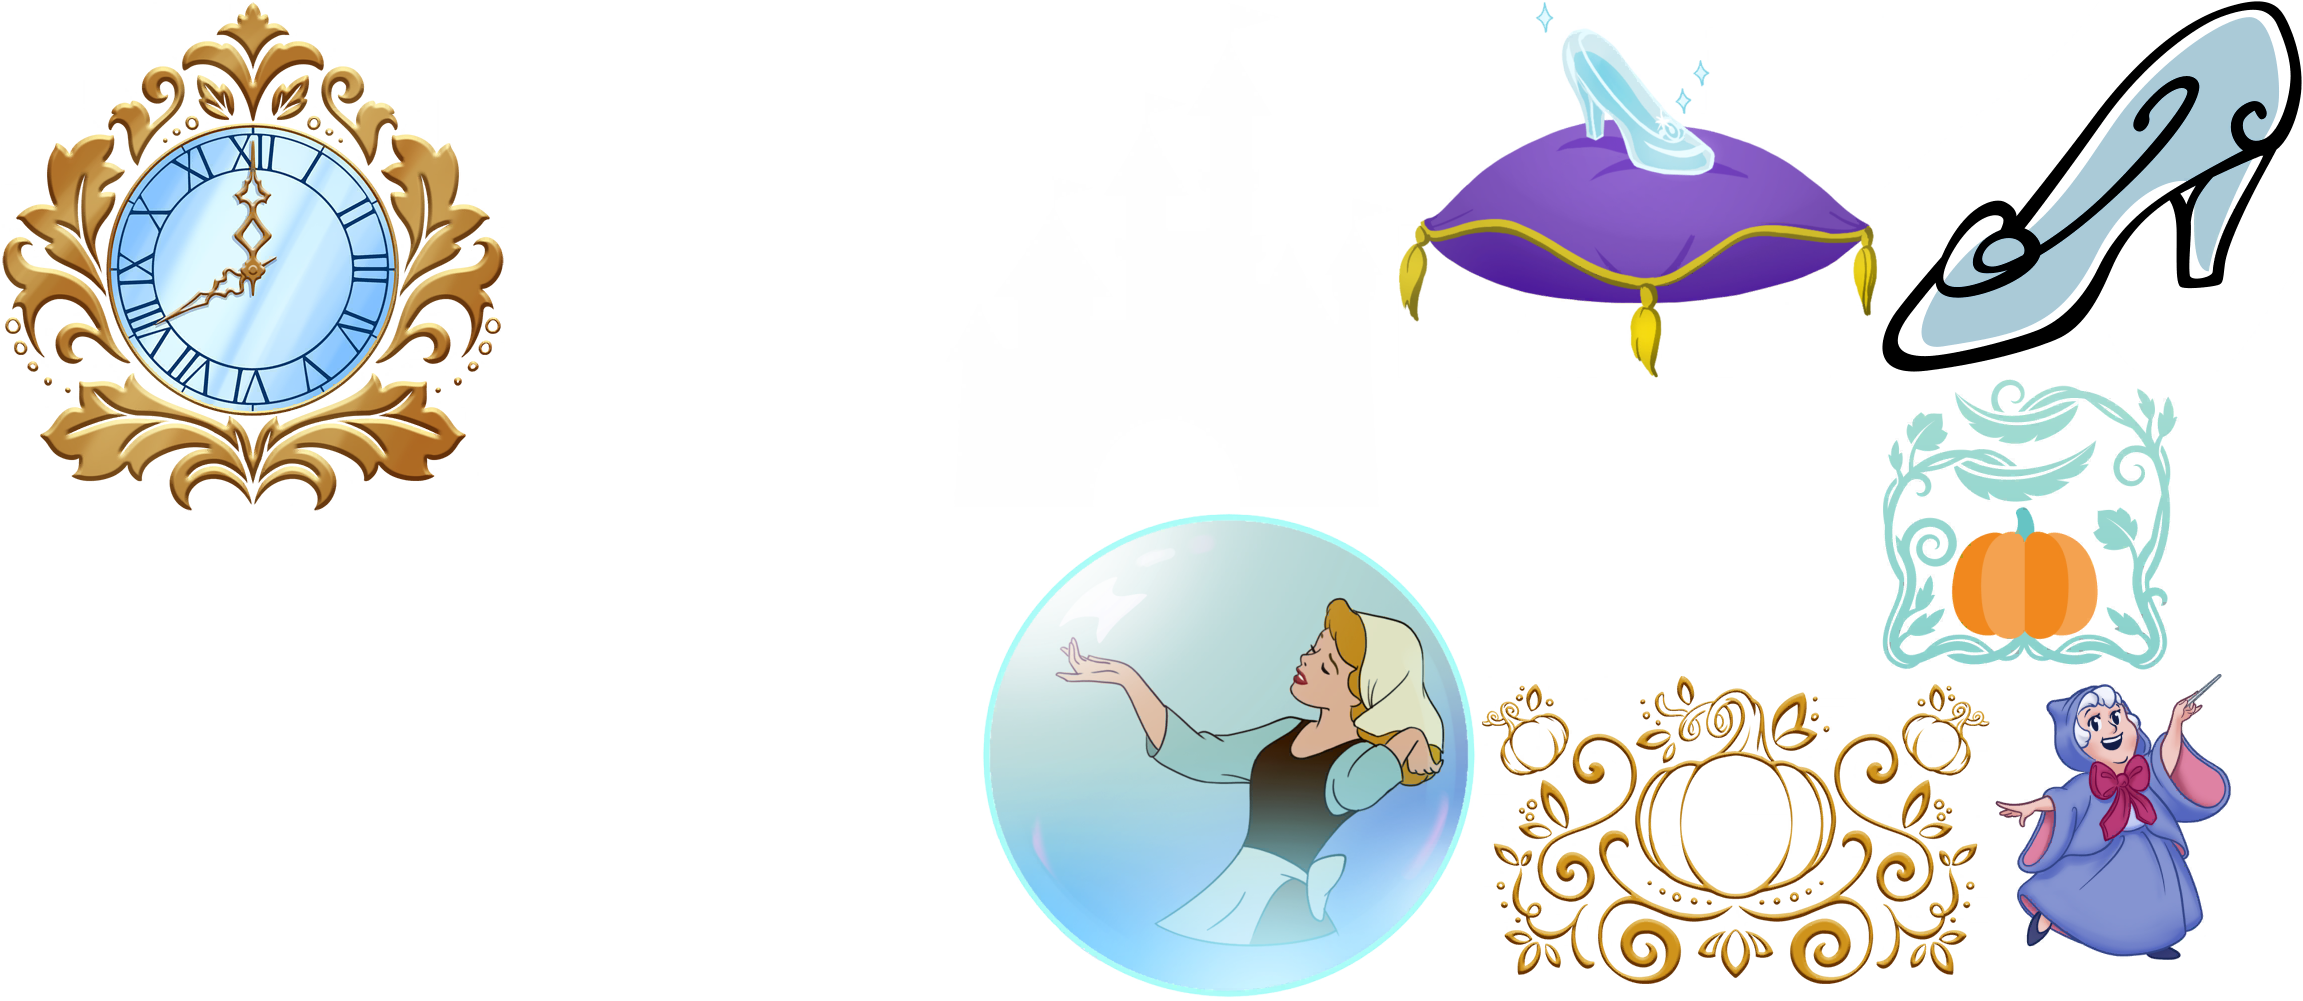 Disney Dreamlight Valley - Motifs - Cinderella